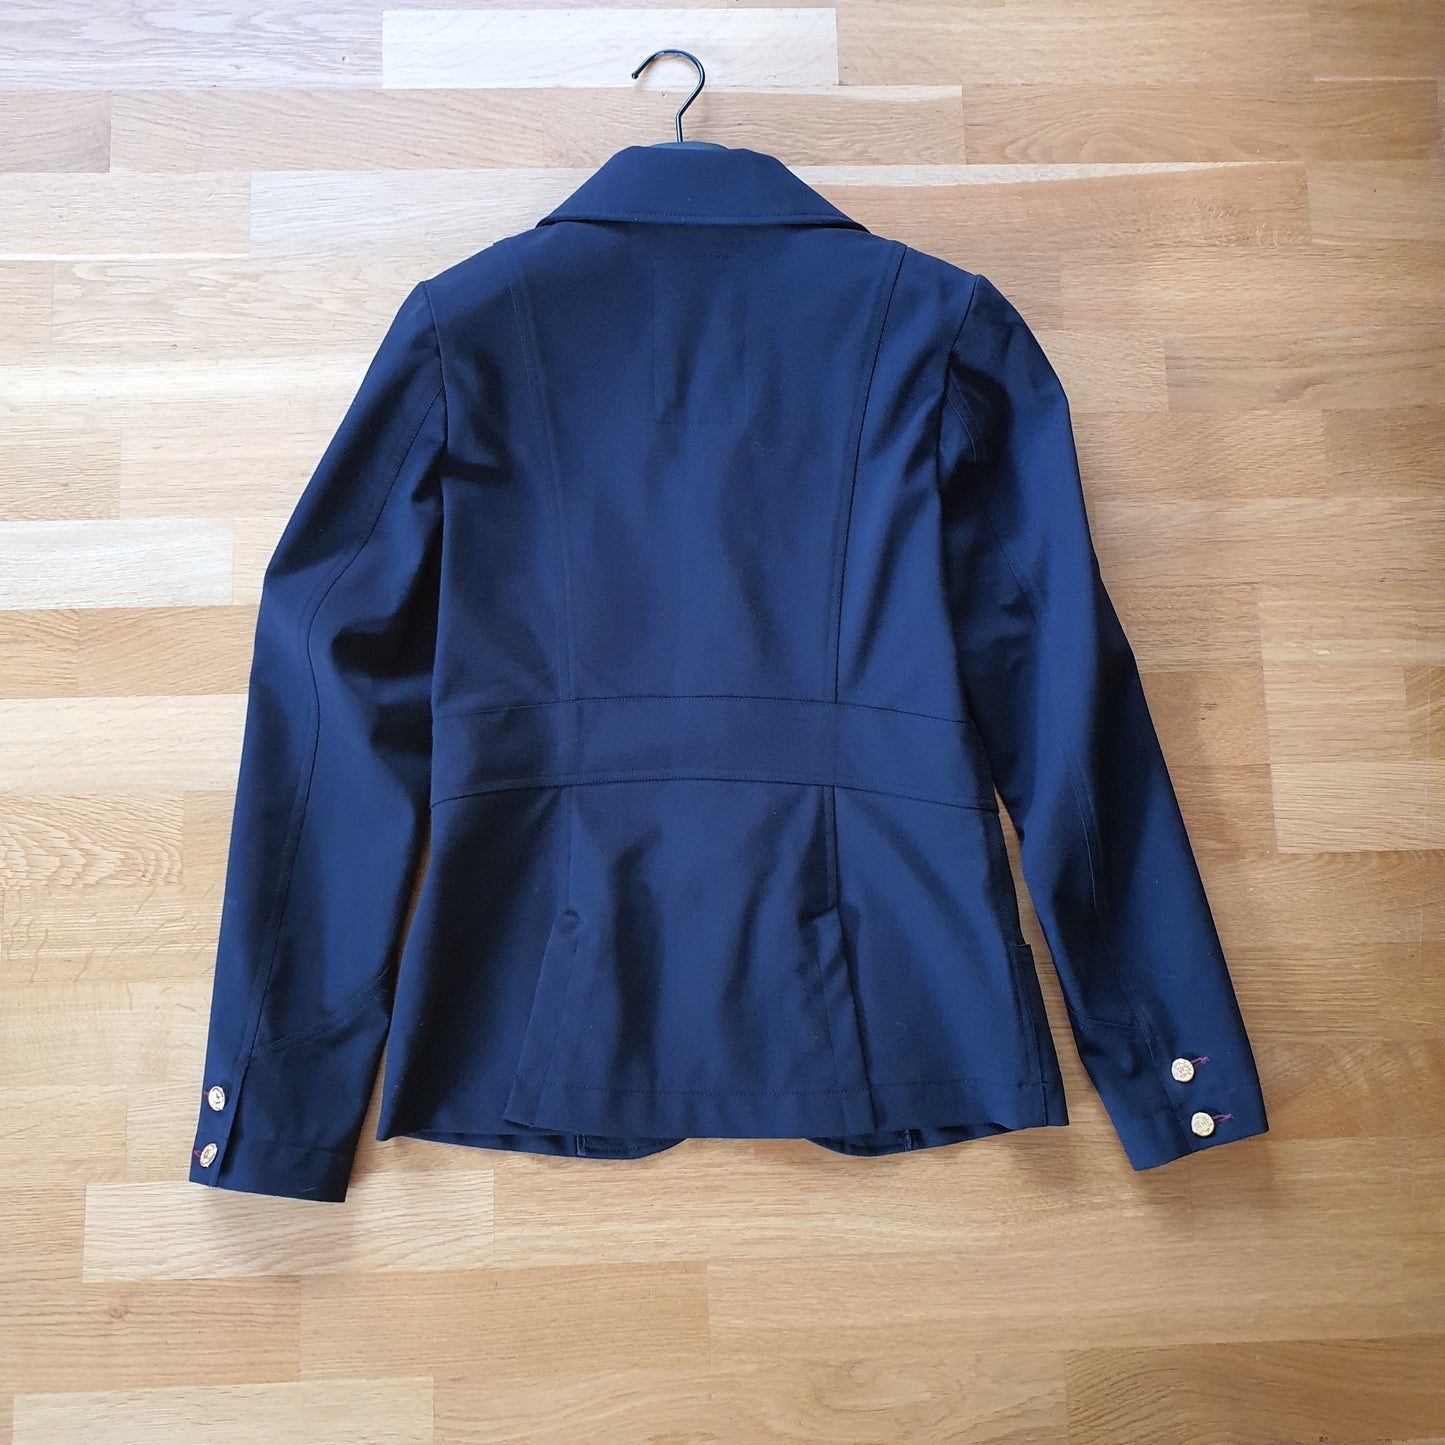 Kingsland dark navy show jacket ladies size 8